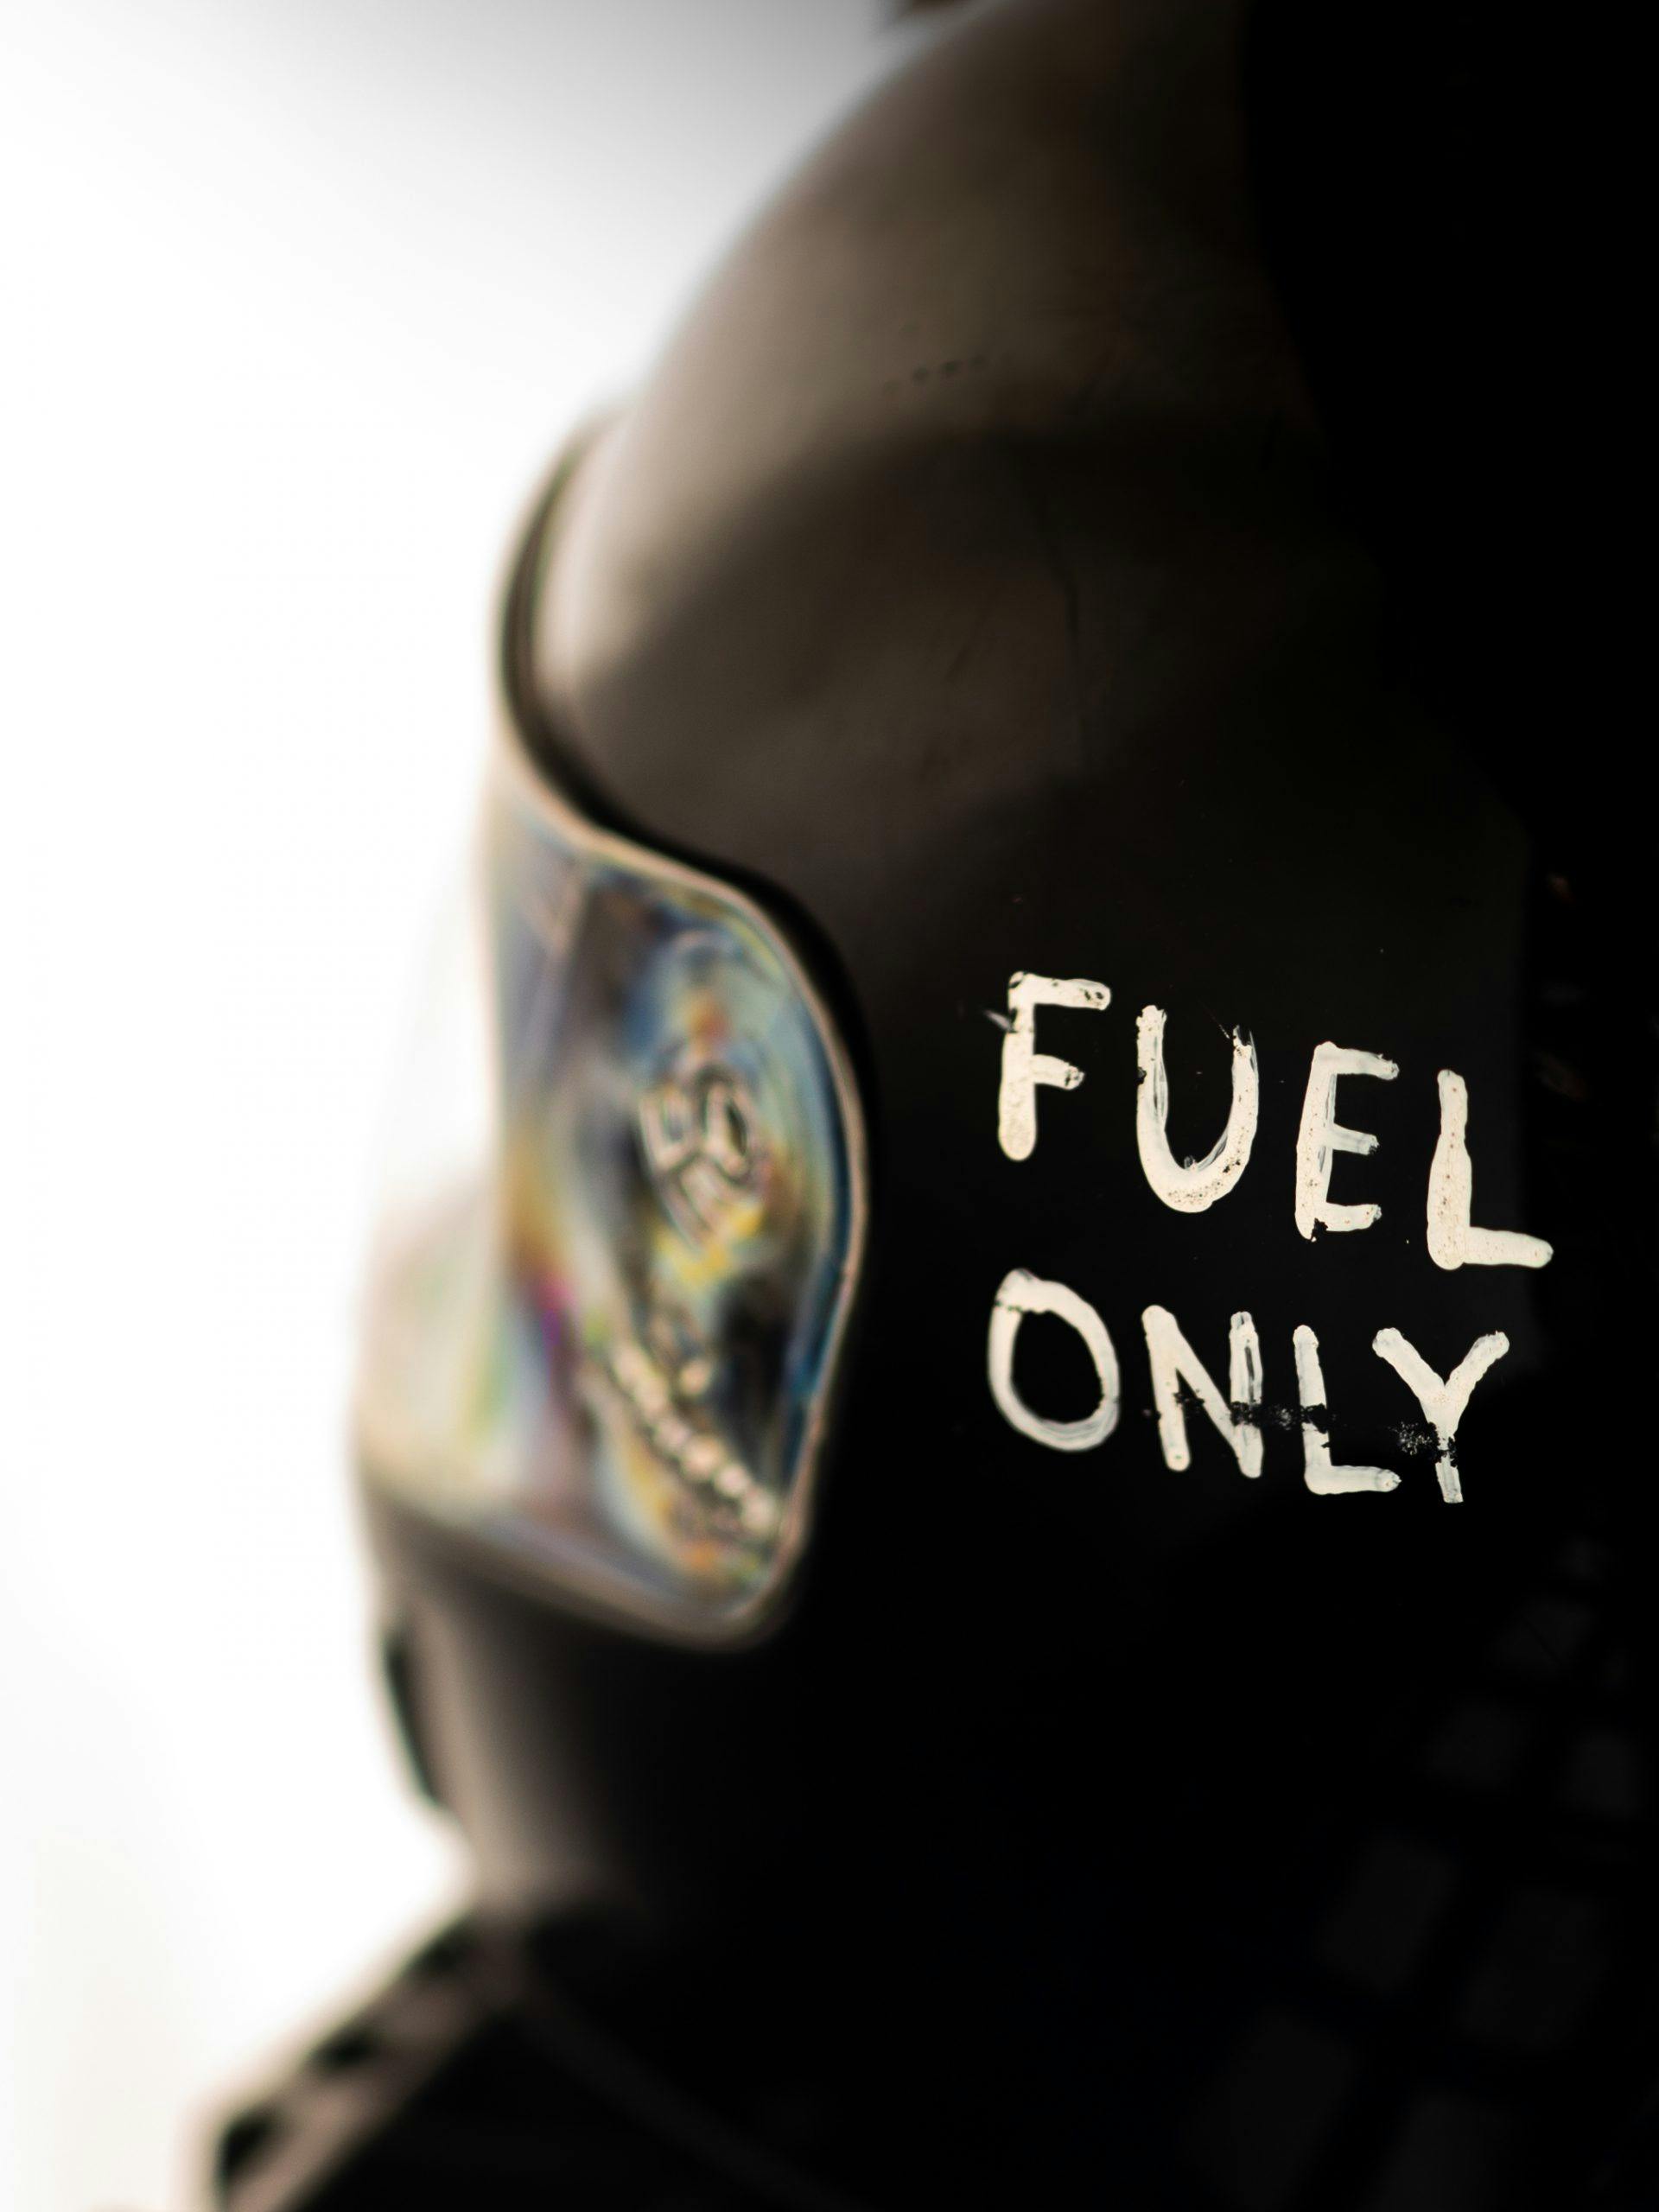 Mid-Ohio WRL racing fuel only helmet detail